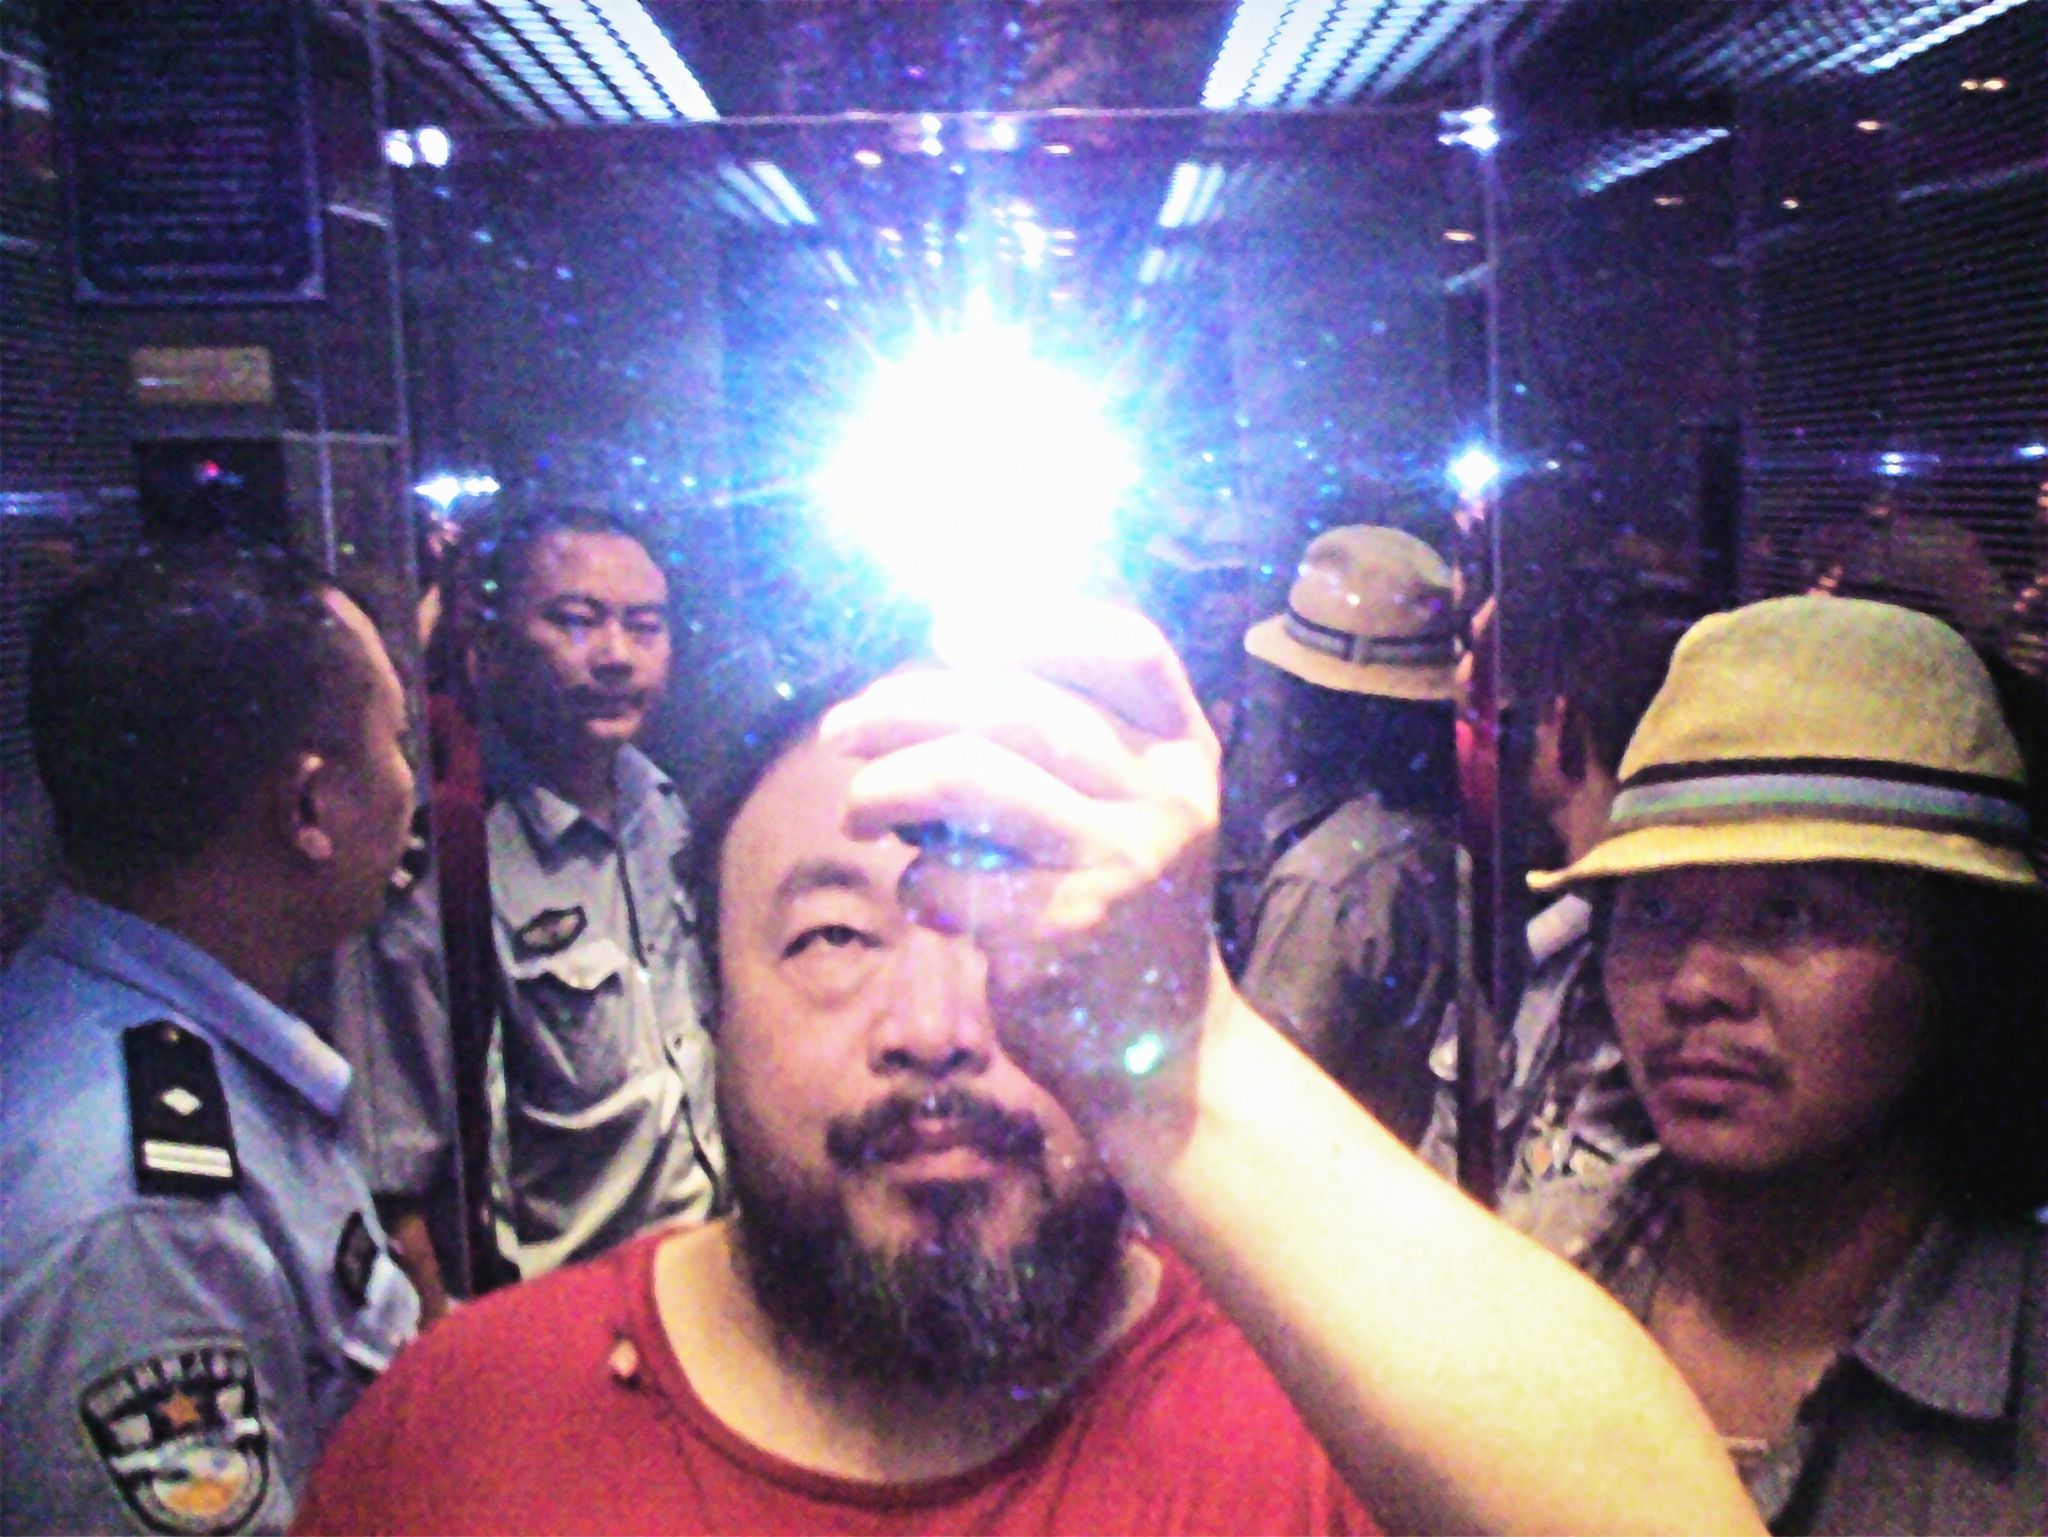 Il·luminació, 2009 © Ai Weiwei